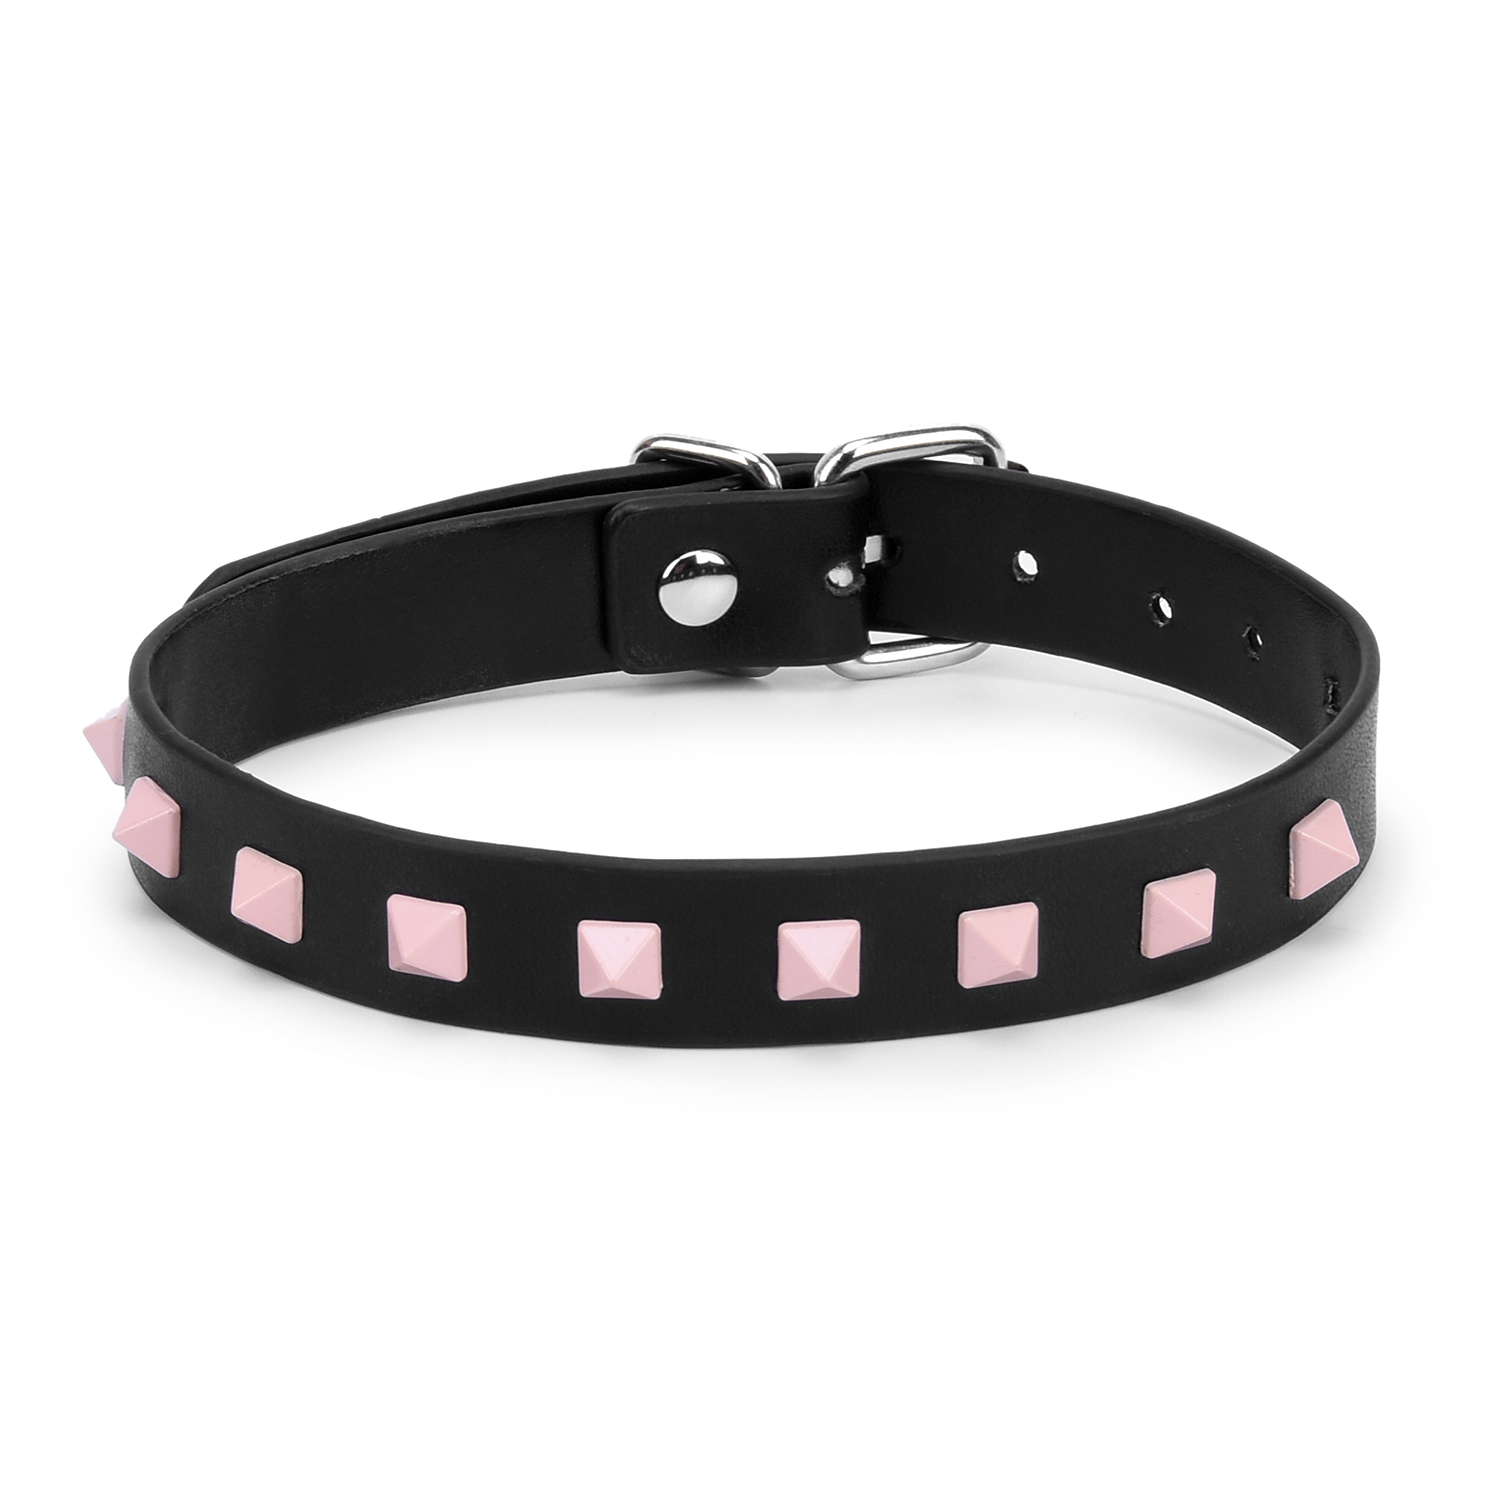 Adjustable attractive pink square revit collar